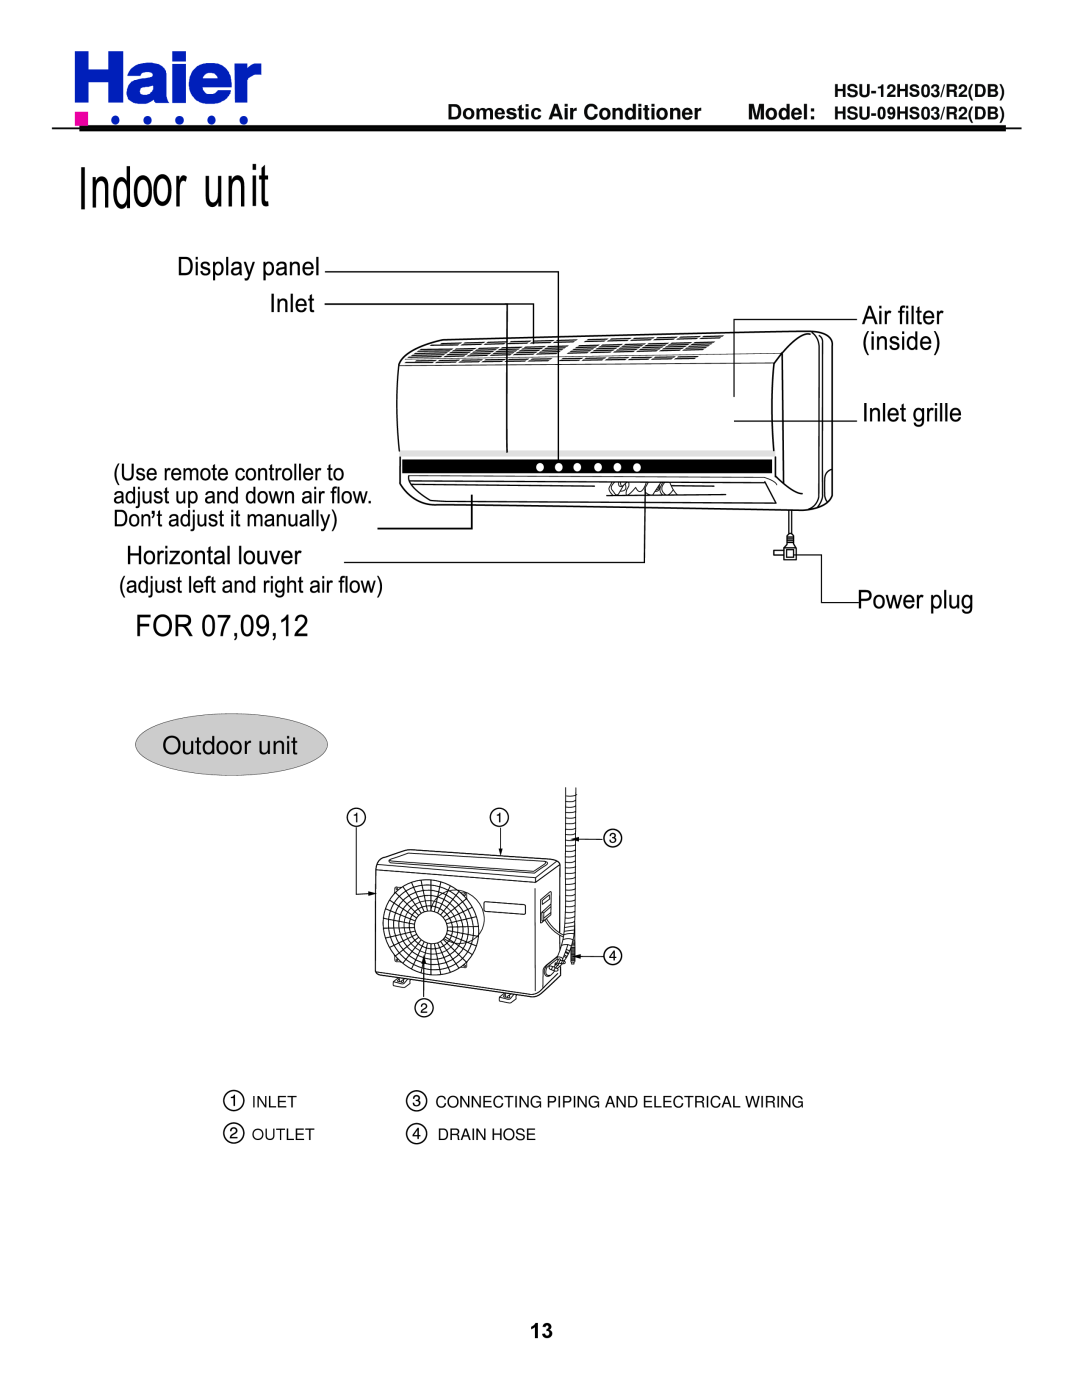 Haier HSU-12HS03/R2DB Outdoor unit, Domestic Air Conditioner, Model HSU-09HS03/R2DB, Inlet, Outlet, Drain Hose 